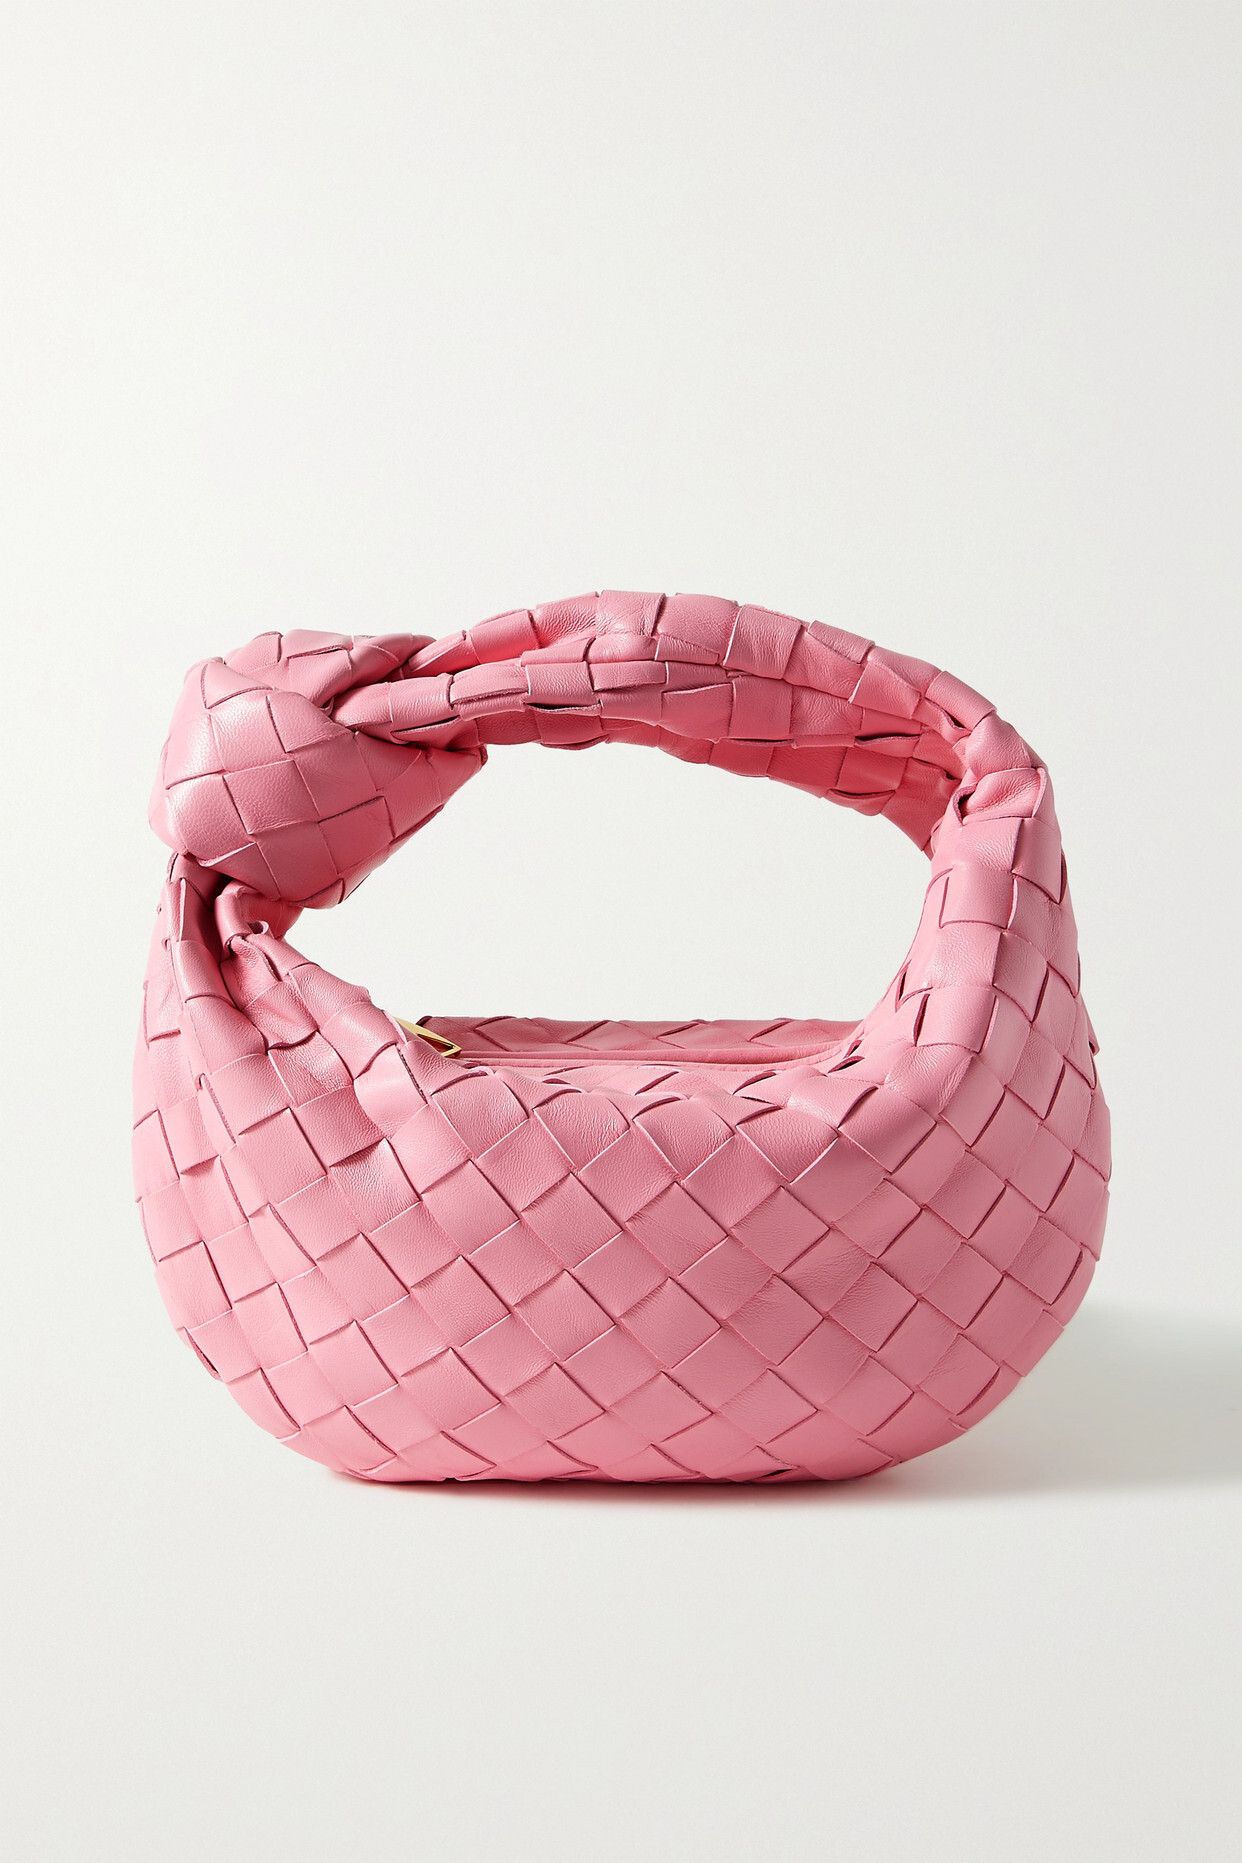 Bottega Veneta - Jodie Mini Knotted Intrecciato Leather Tote - Pink